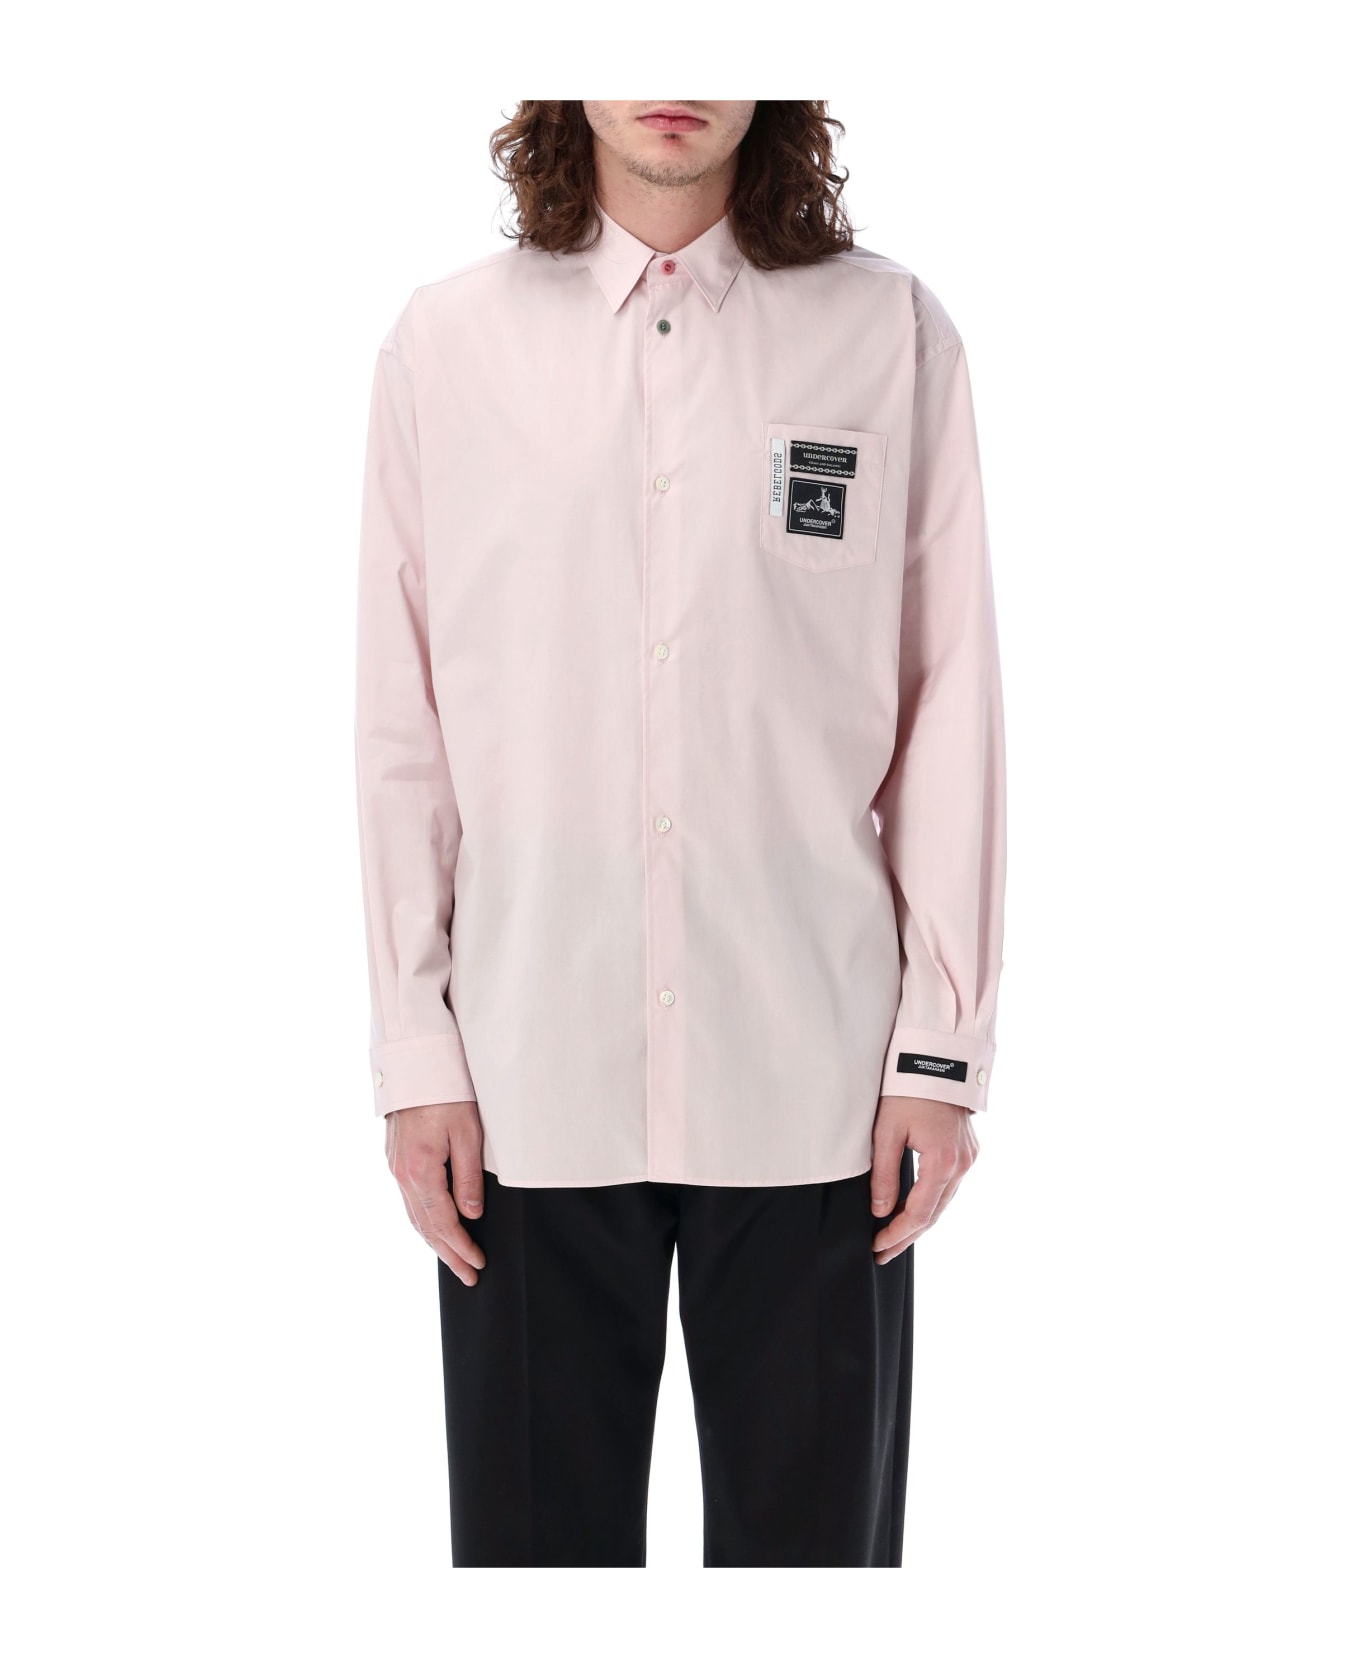 Undercover Jun Takahashi Coolmax® Broad Shirt - PINK